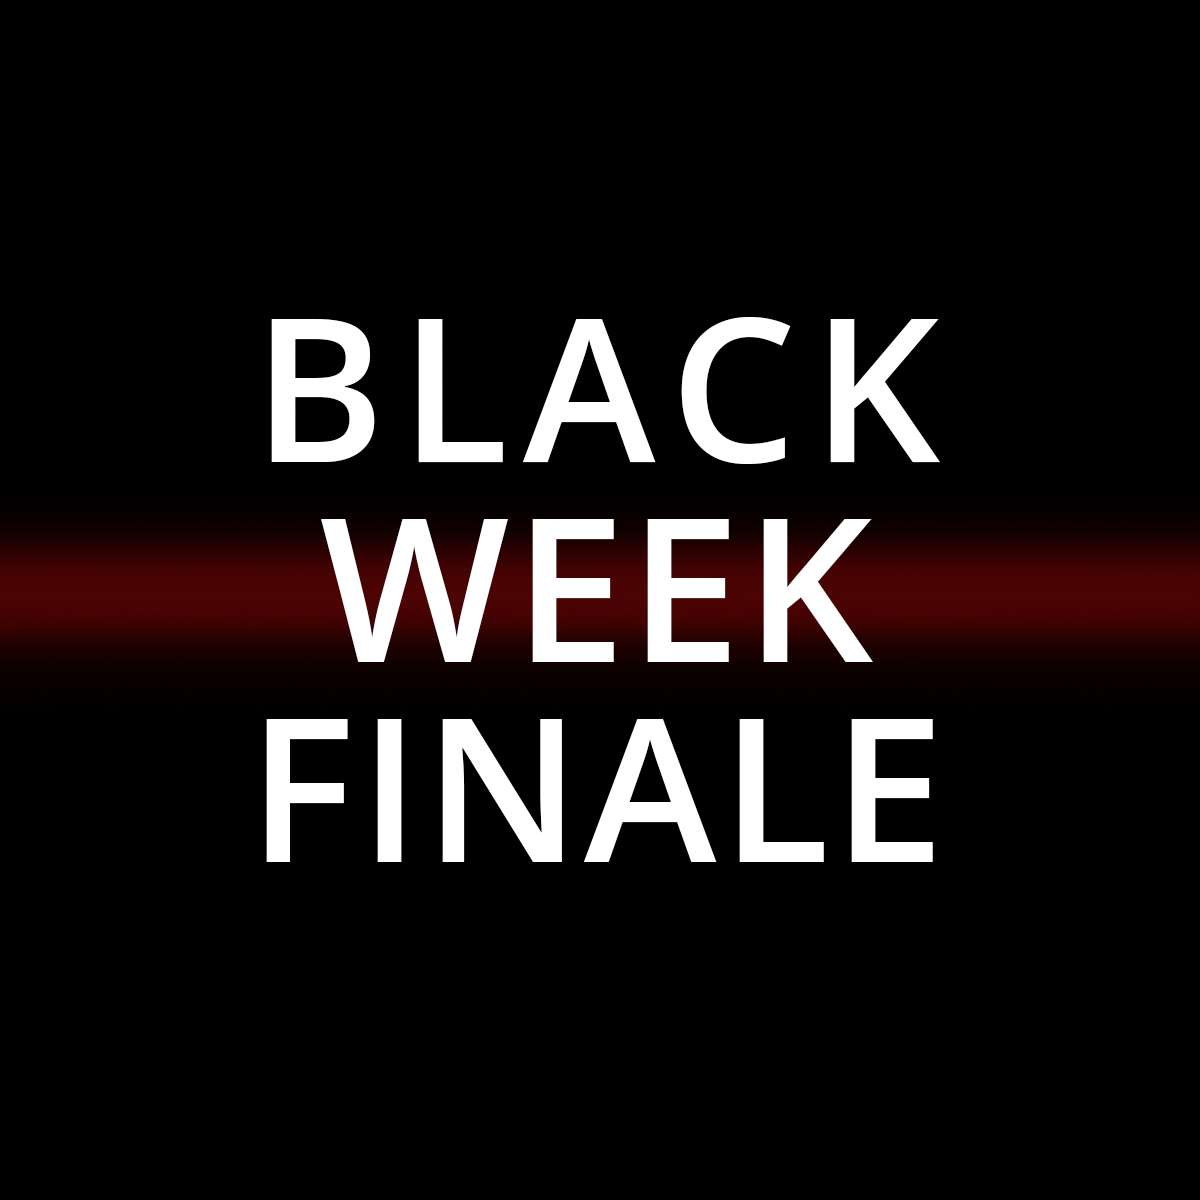 Black Week Finale